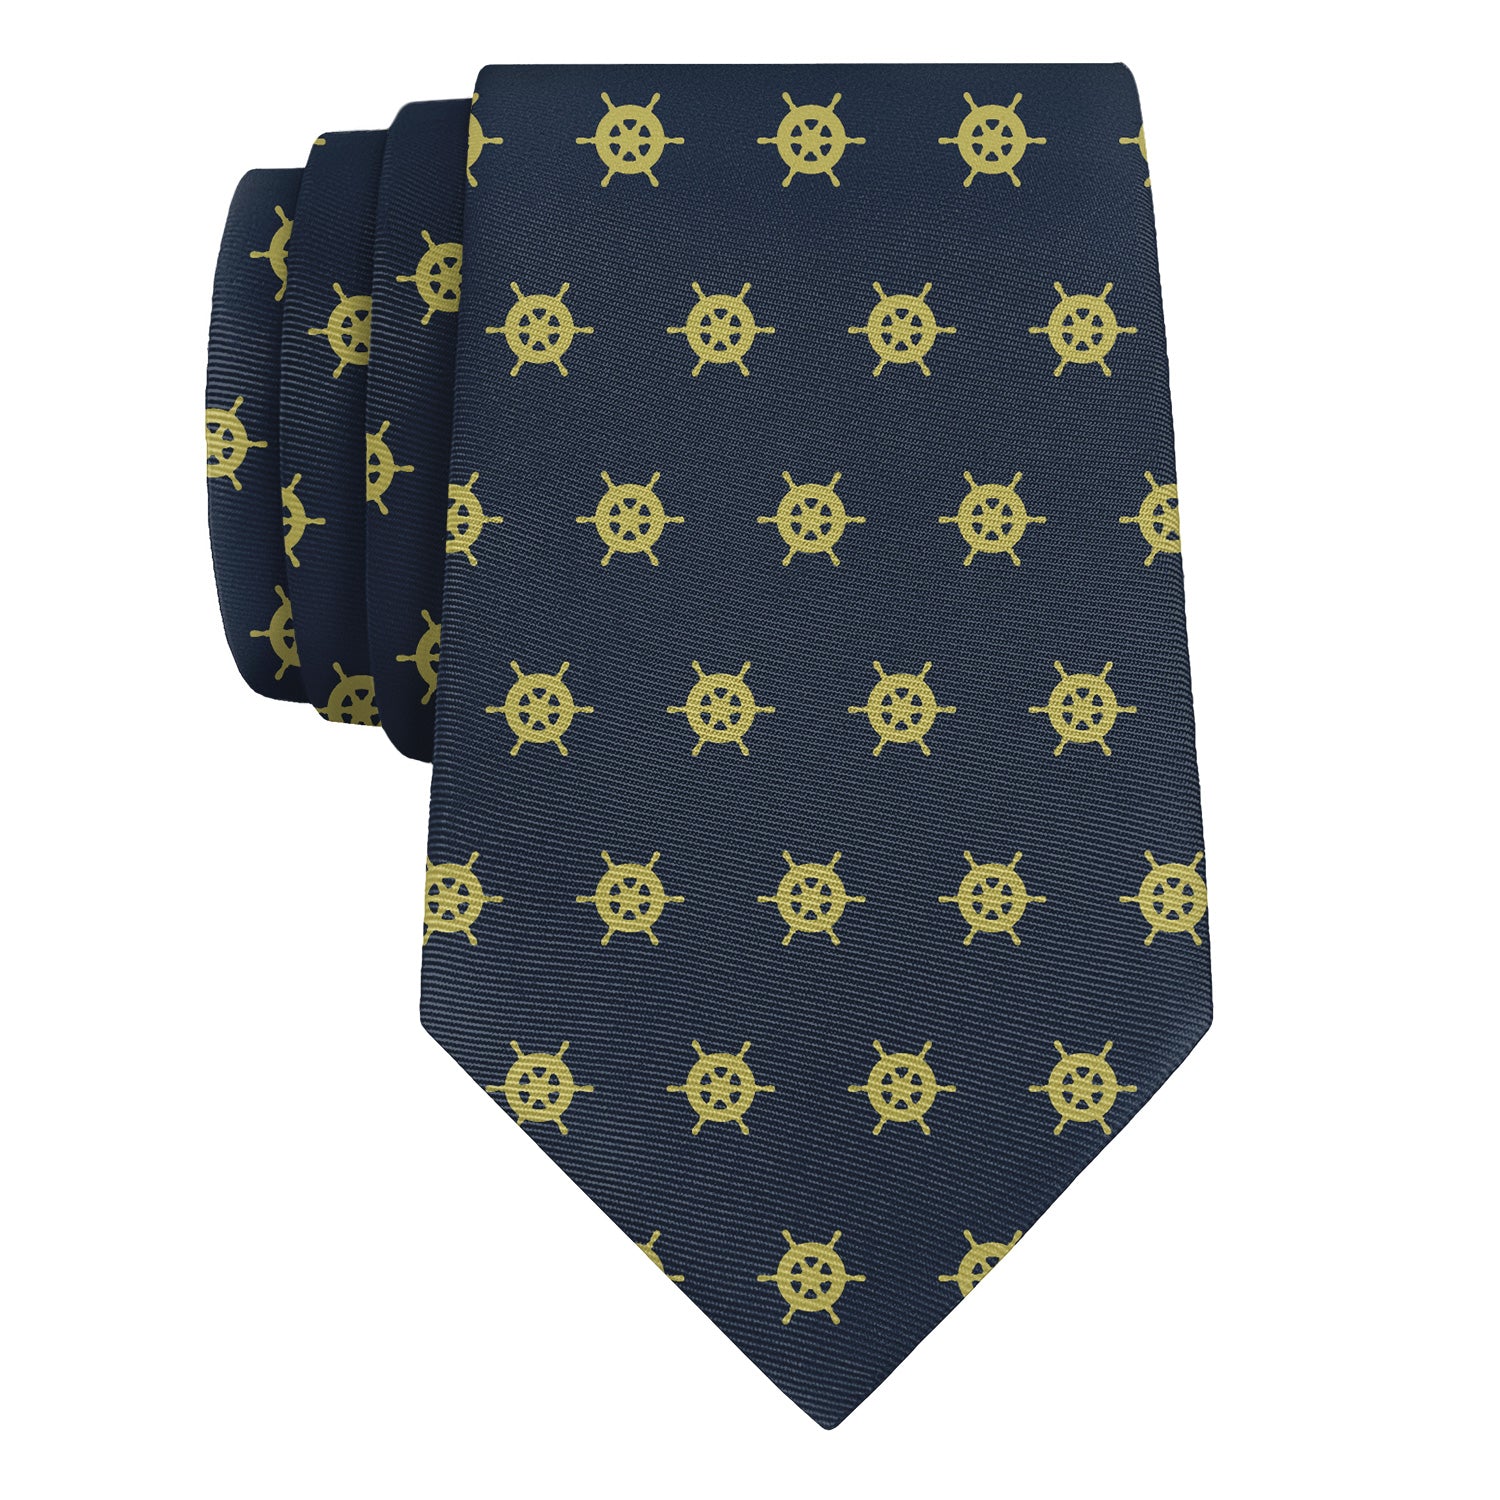 Captain's Wheel Necktie - Rolled - Knotty Tie Co.